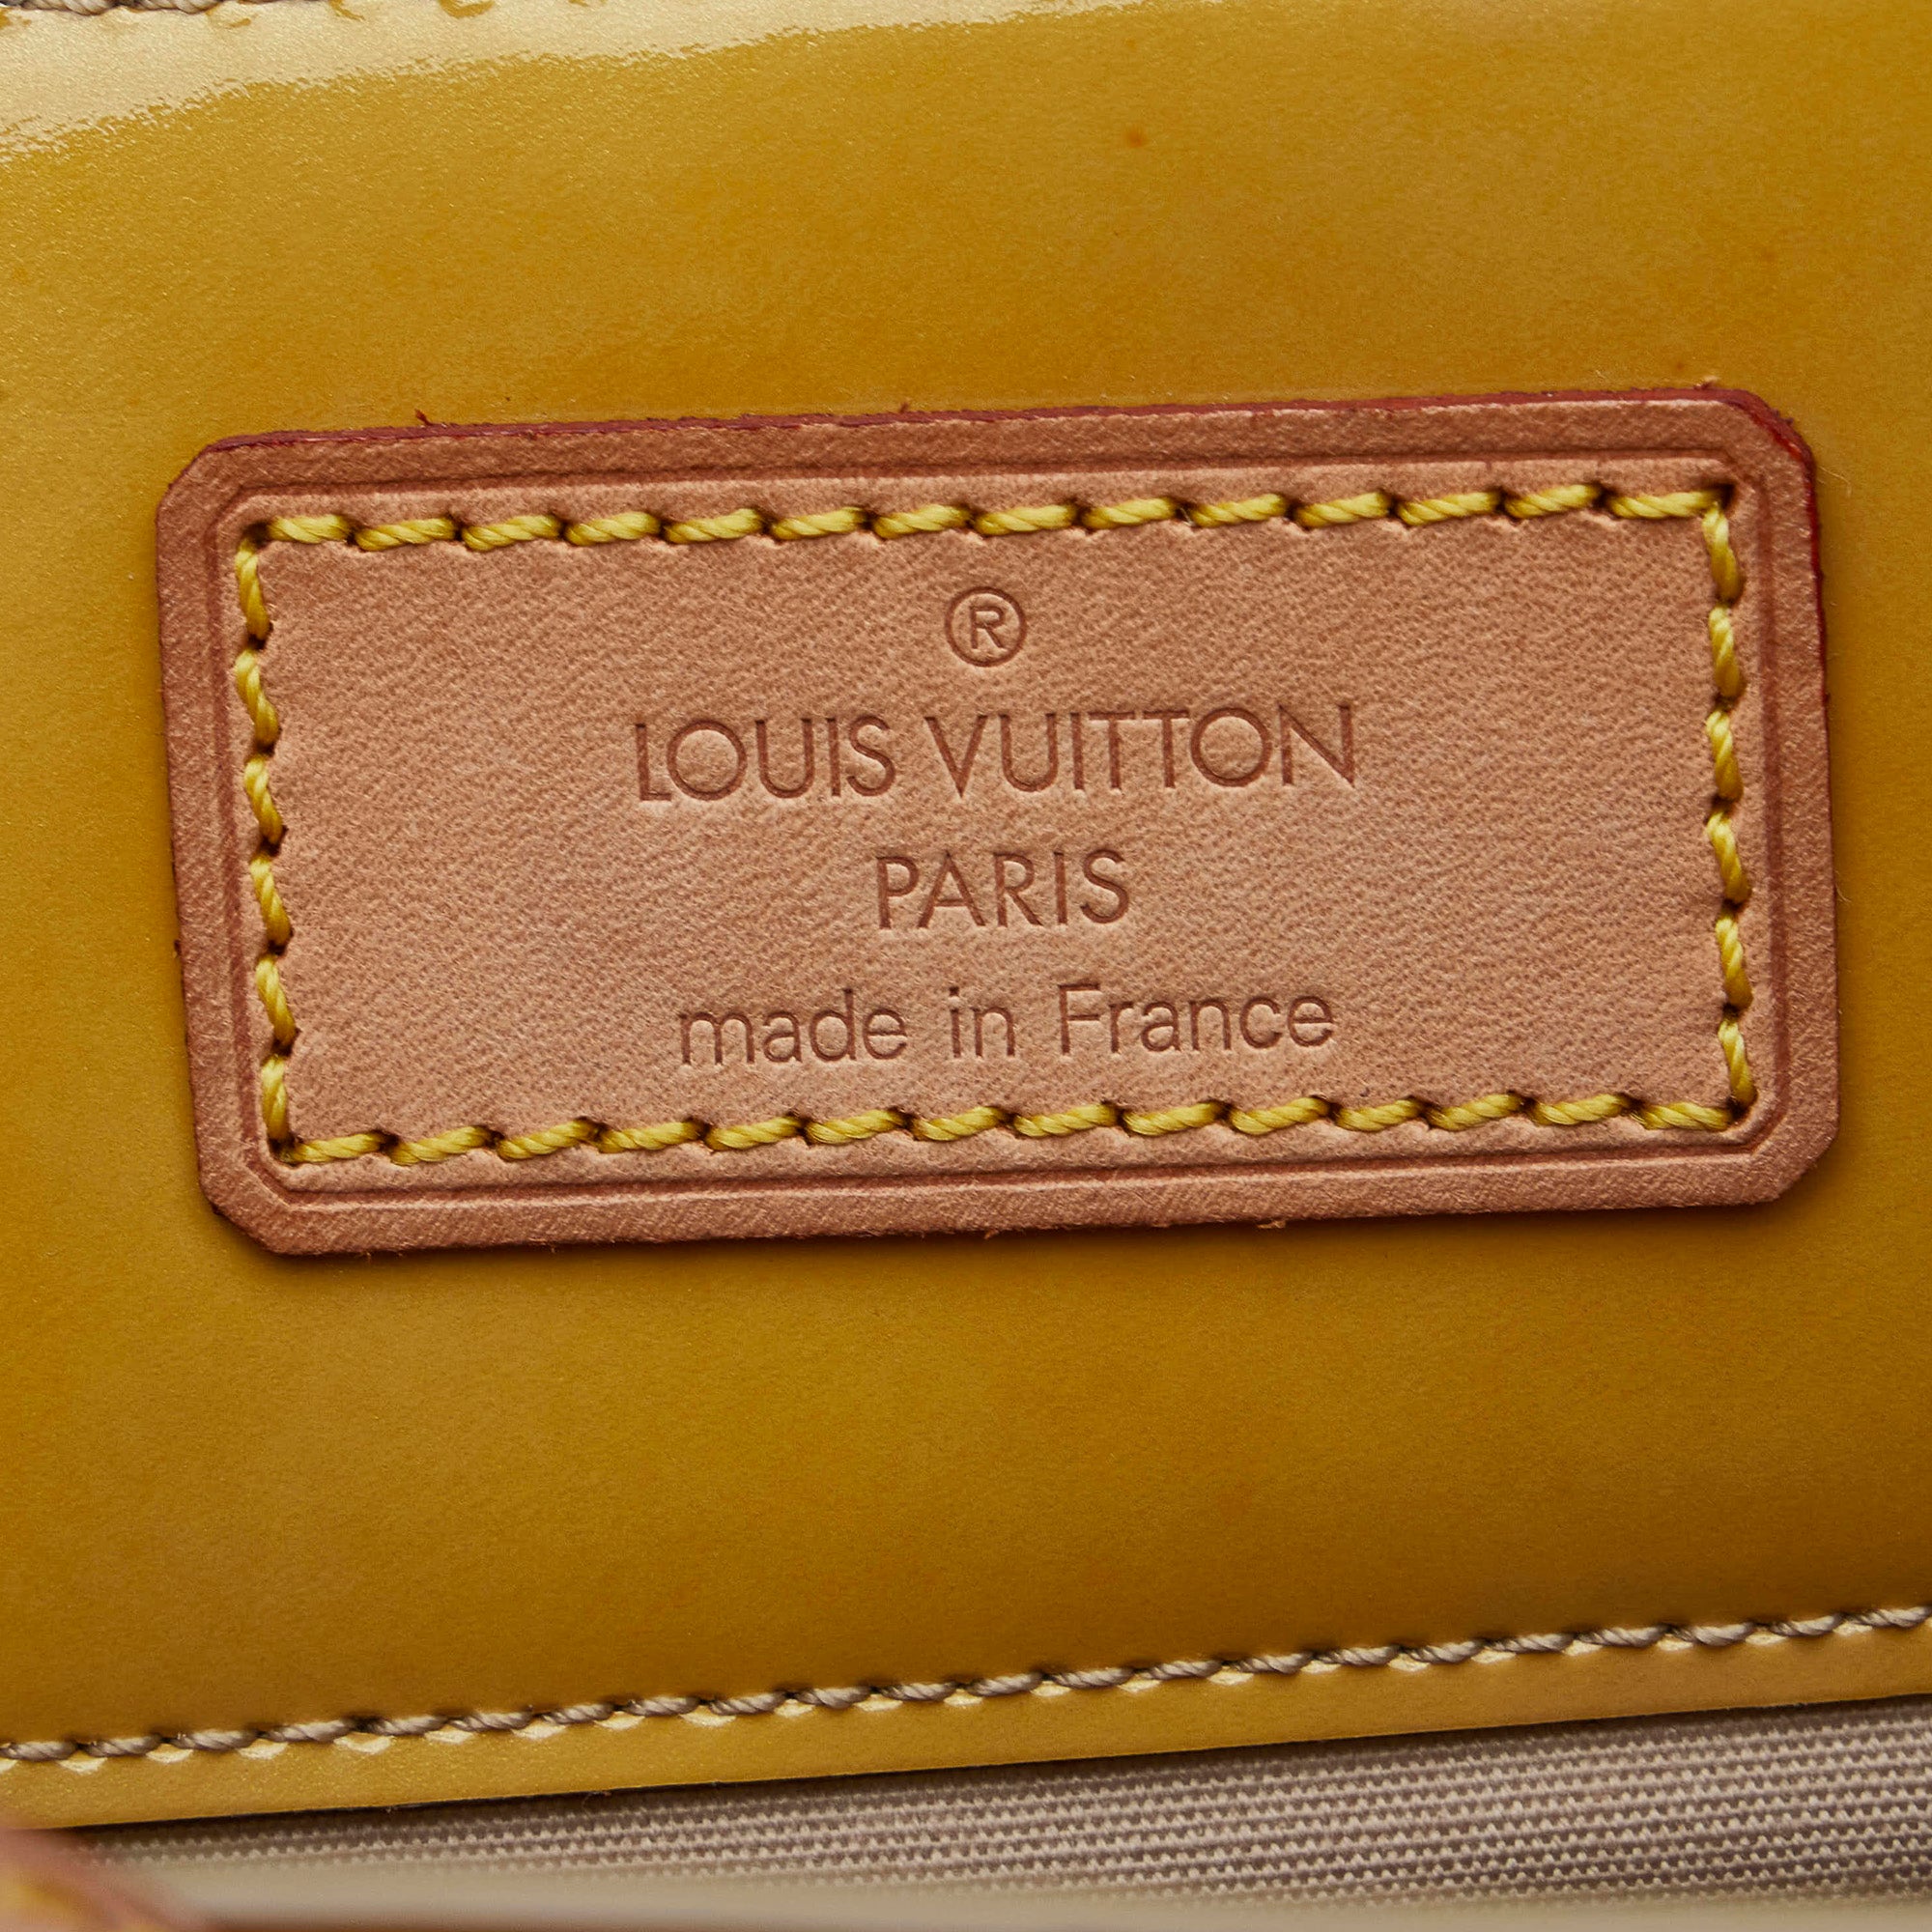 Louis Vuitton Vintage - Vernis Reade MM Bag - Black - Vernis